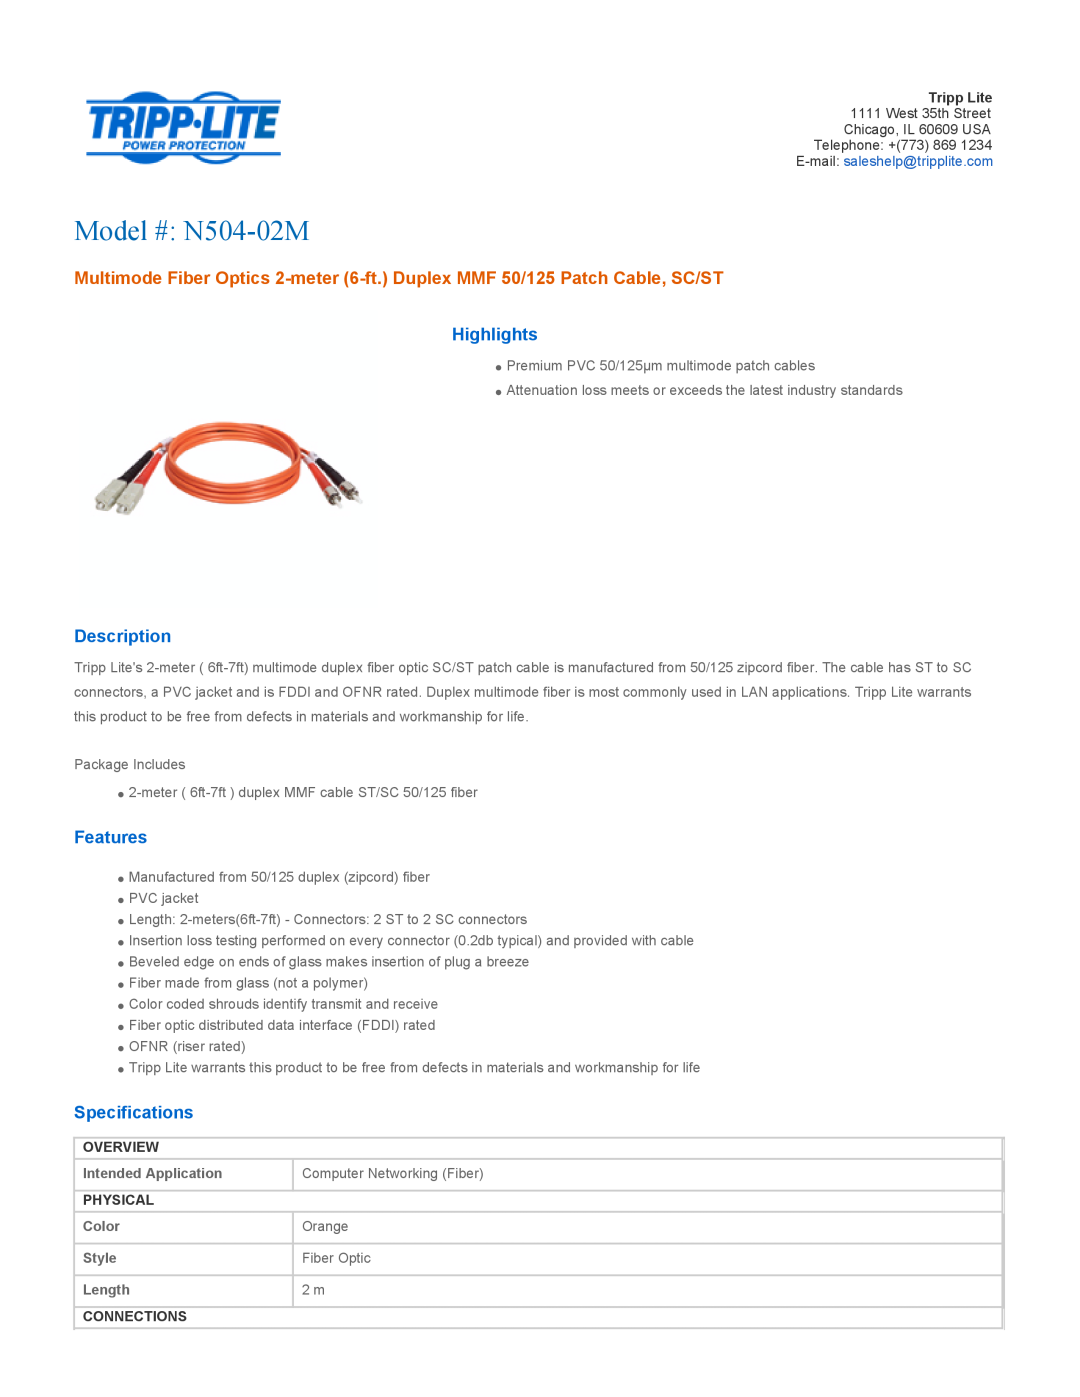 Tripp Lite N504-02M specifications Intended Application, Computer Networking Fiber, Color, Orange, Style, Fiber Optic 